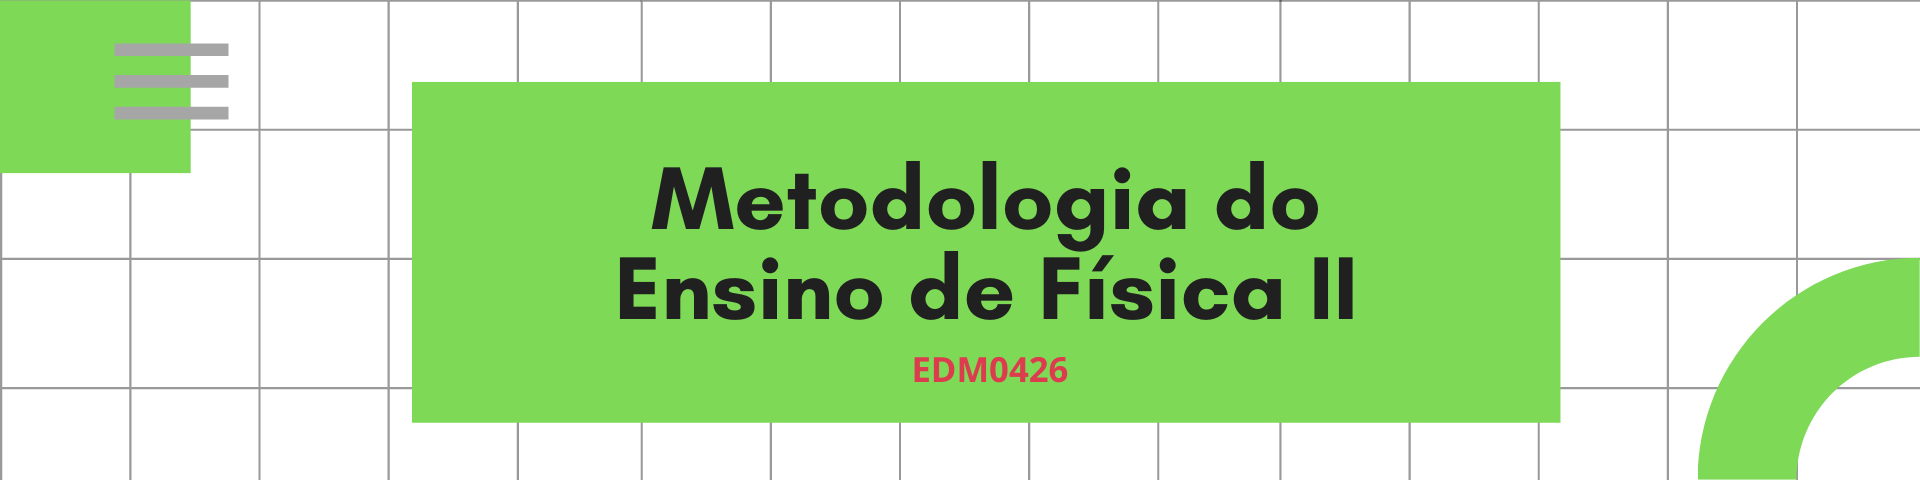 EDM0426 - Metodologia do Ensino de Física II 